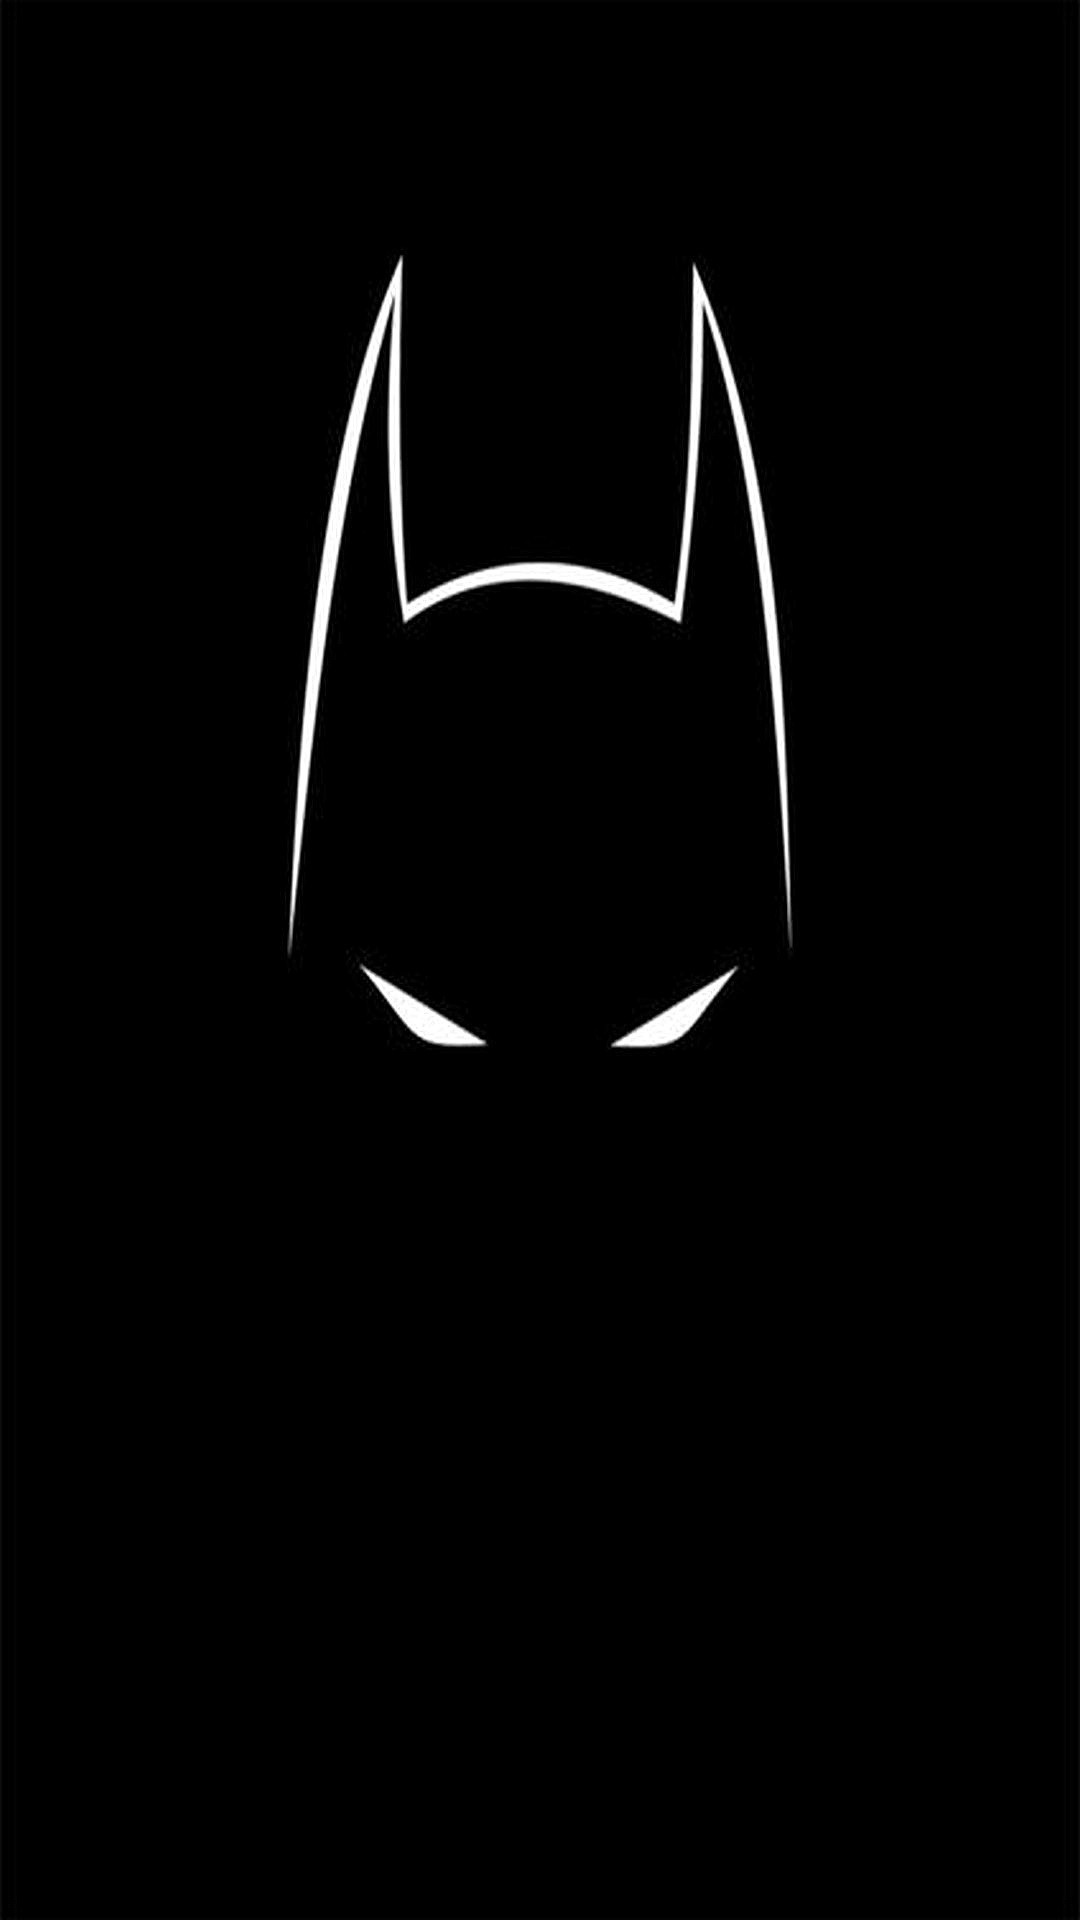 1080x1920 Best 25+ Hd batman wallpaper ideas on Pinterest | Batman artwork, Dark  knight wallpaper and Batman